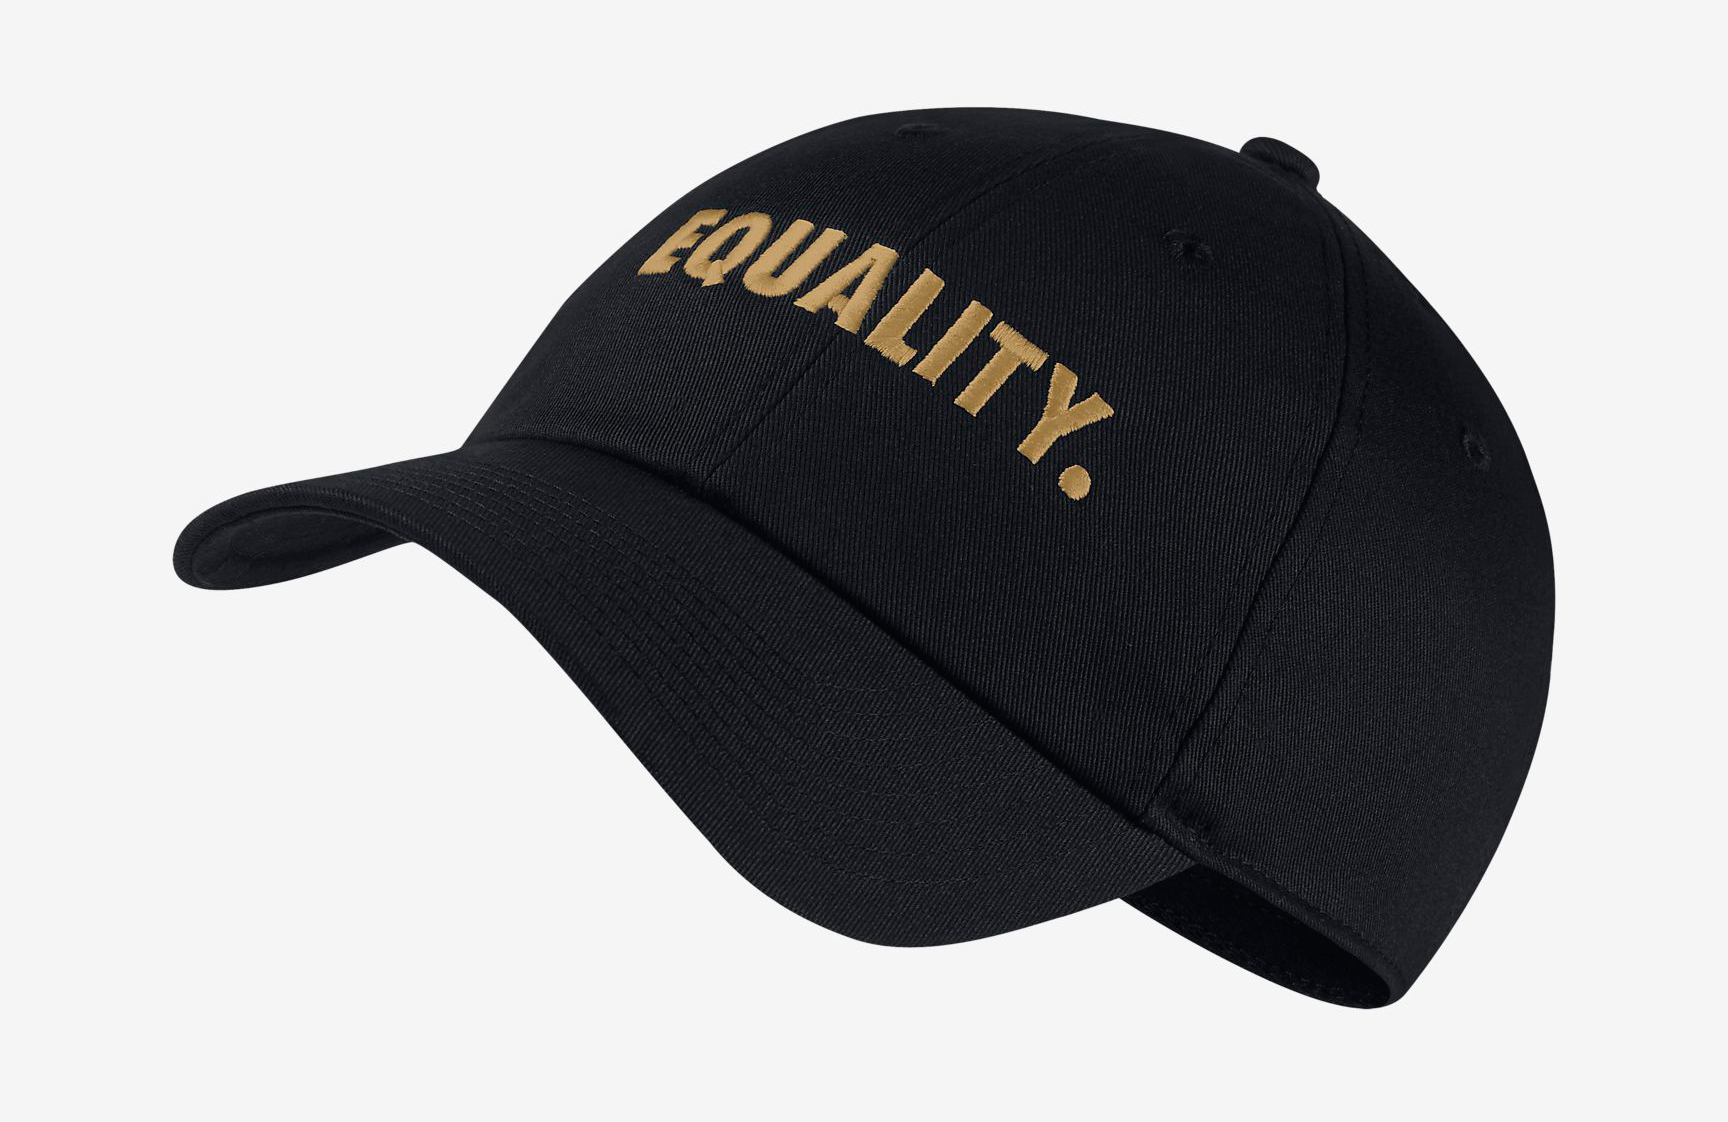 Nike EQUALITY Black Gold Hat 